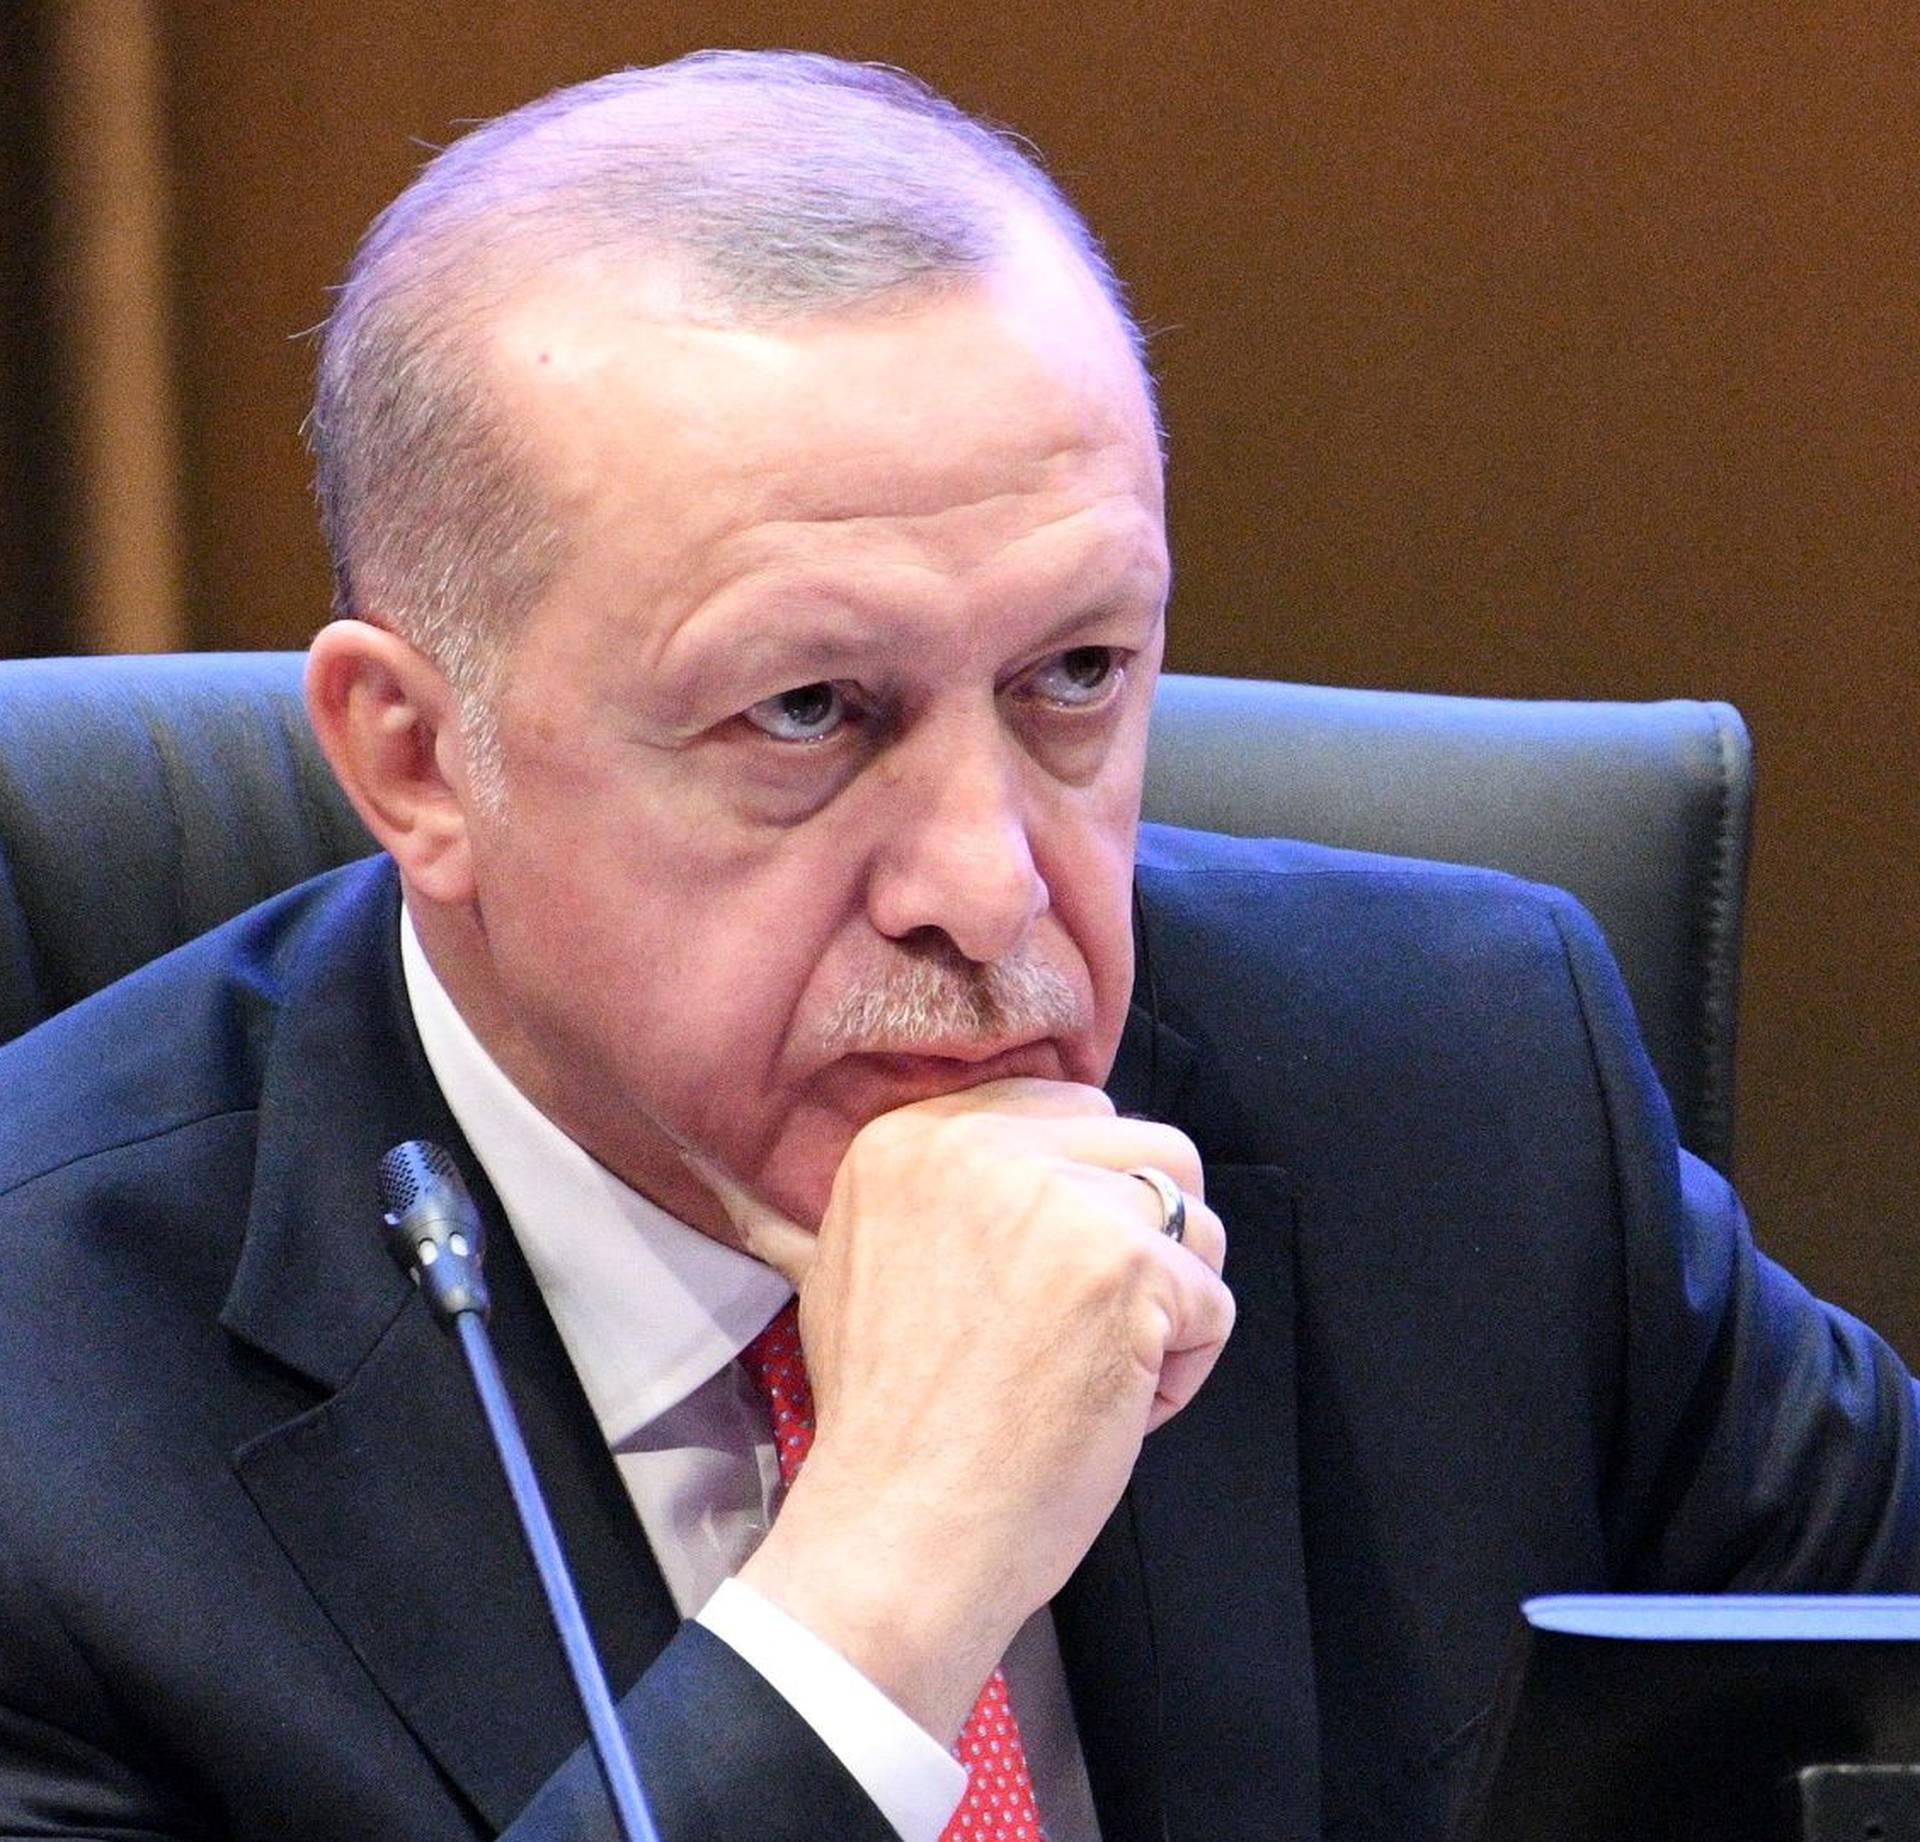 Turkey's President Recep Tayyip Erdogan reacts during a Kuala Lumpur Summit roundtable session in Kuala Lumpur